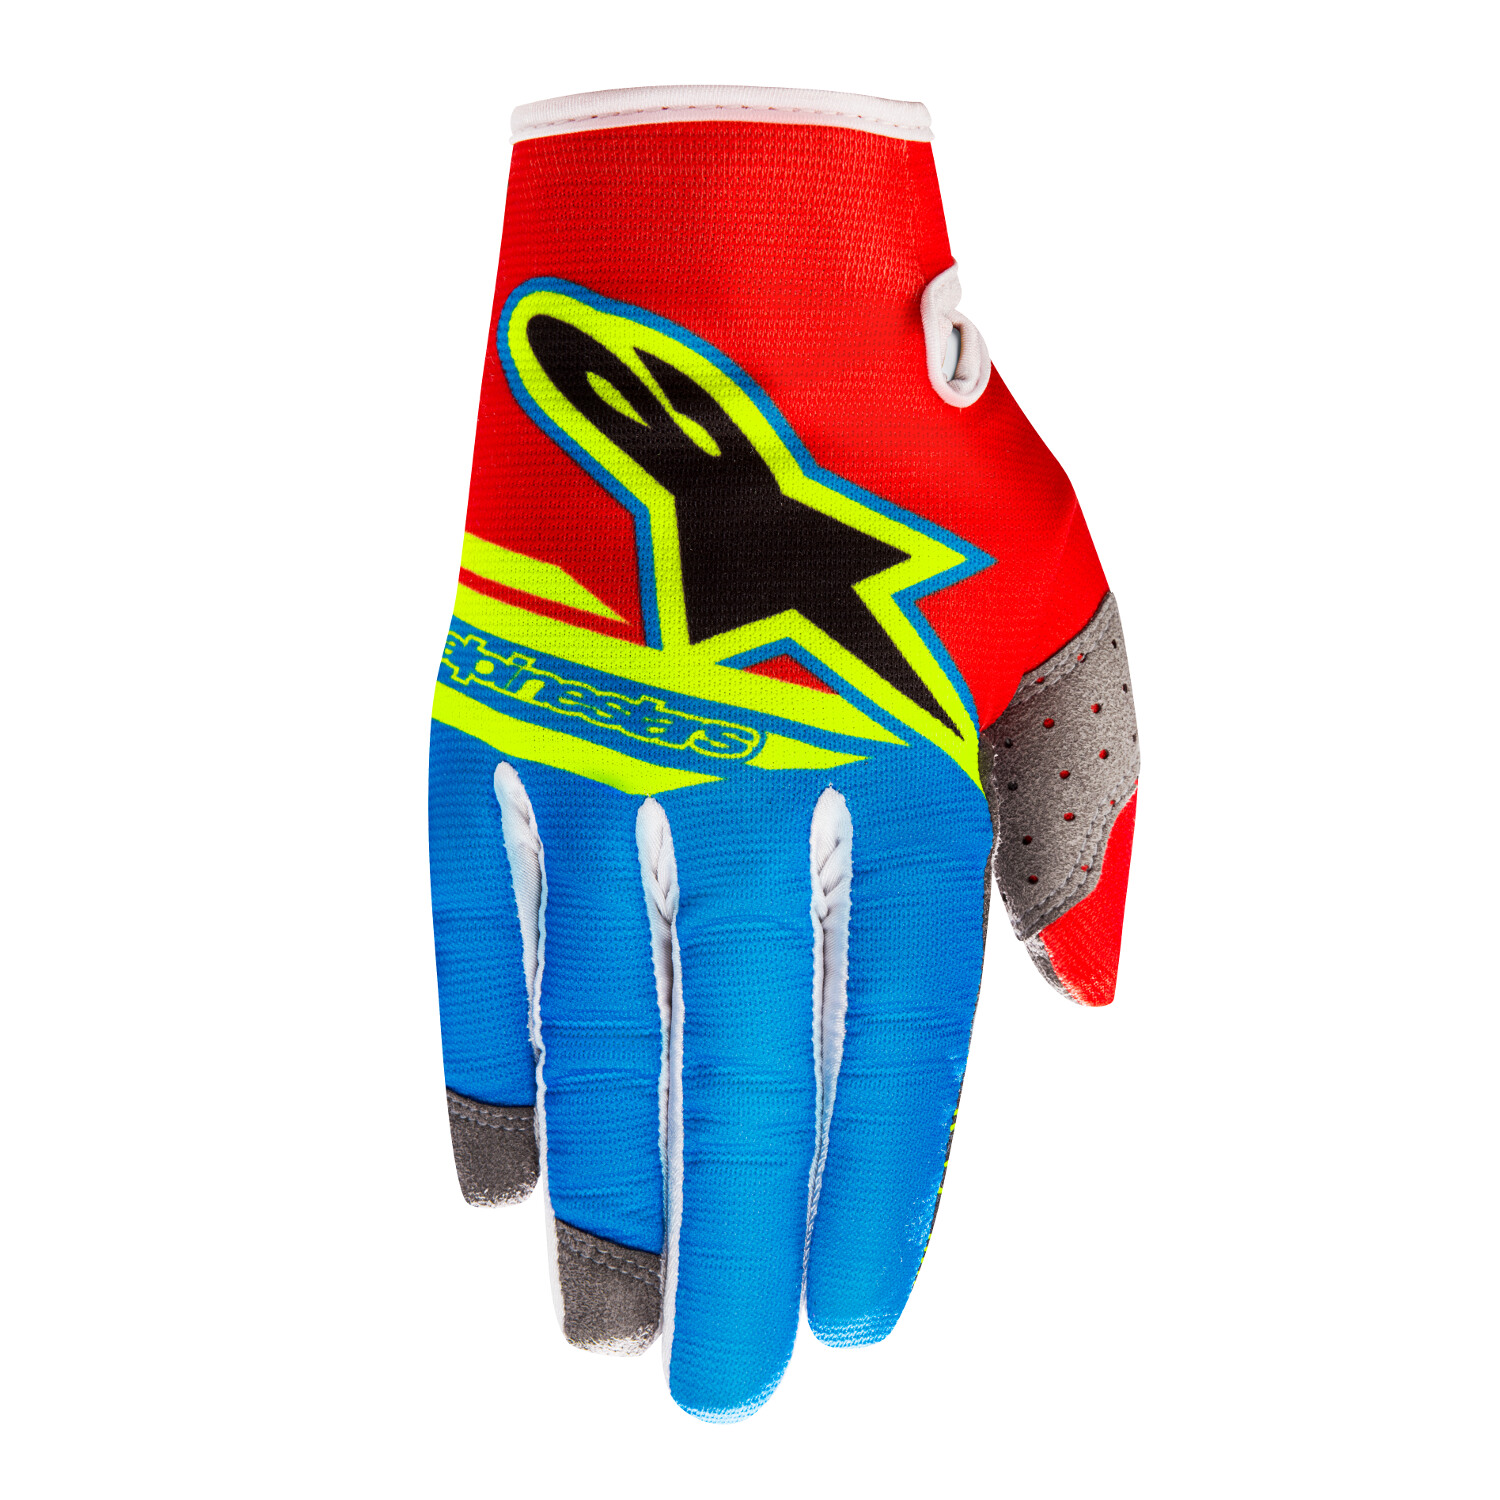 Alpinestars Gloves Radar Flight Red/Aqua/Yellow Fluo - Union Limited Edition